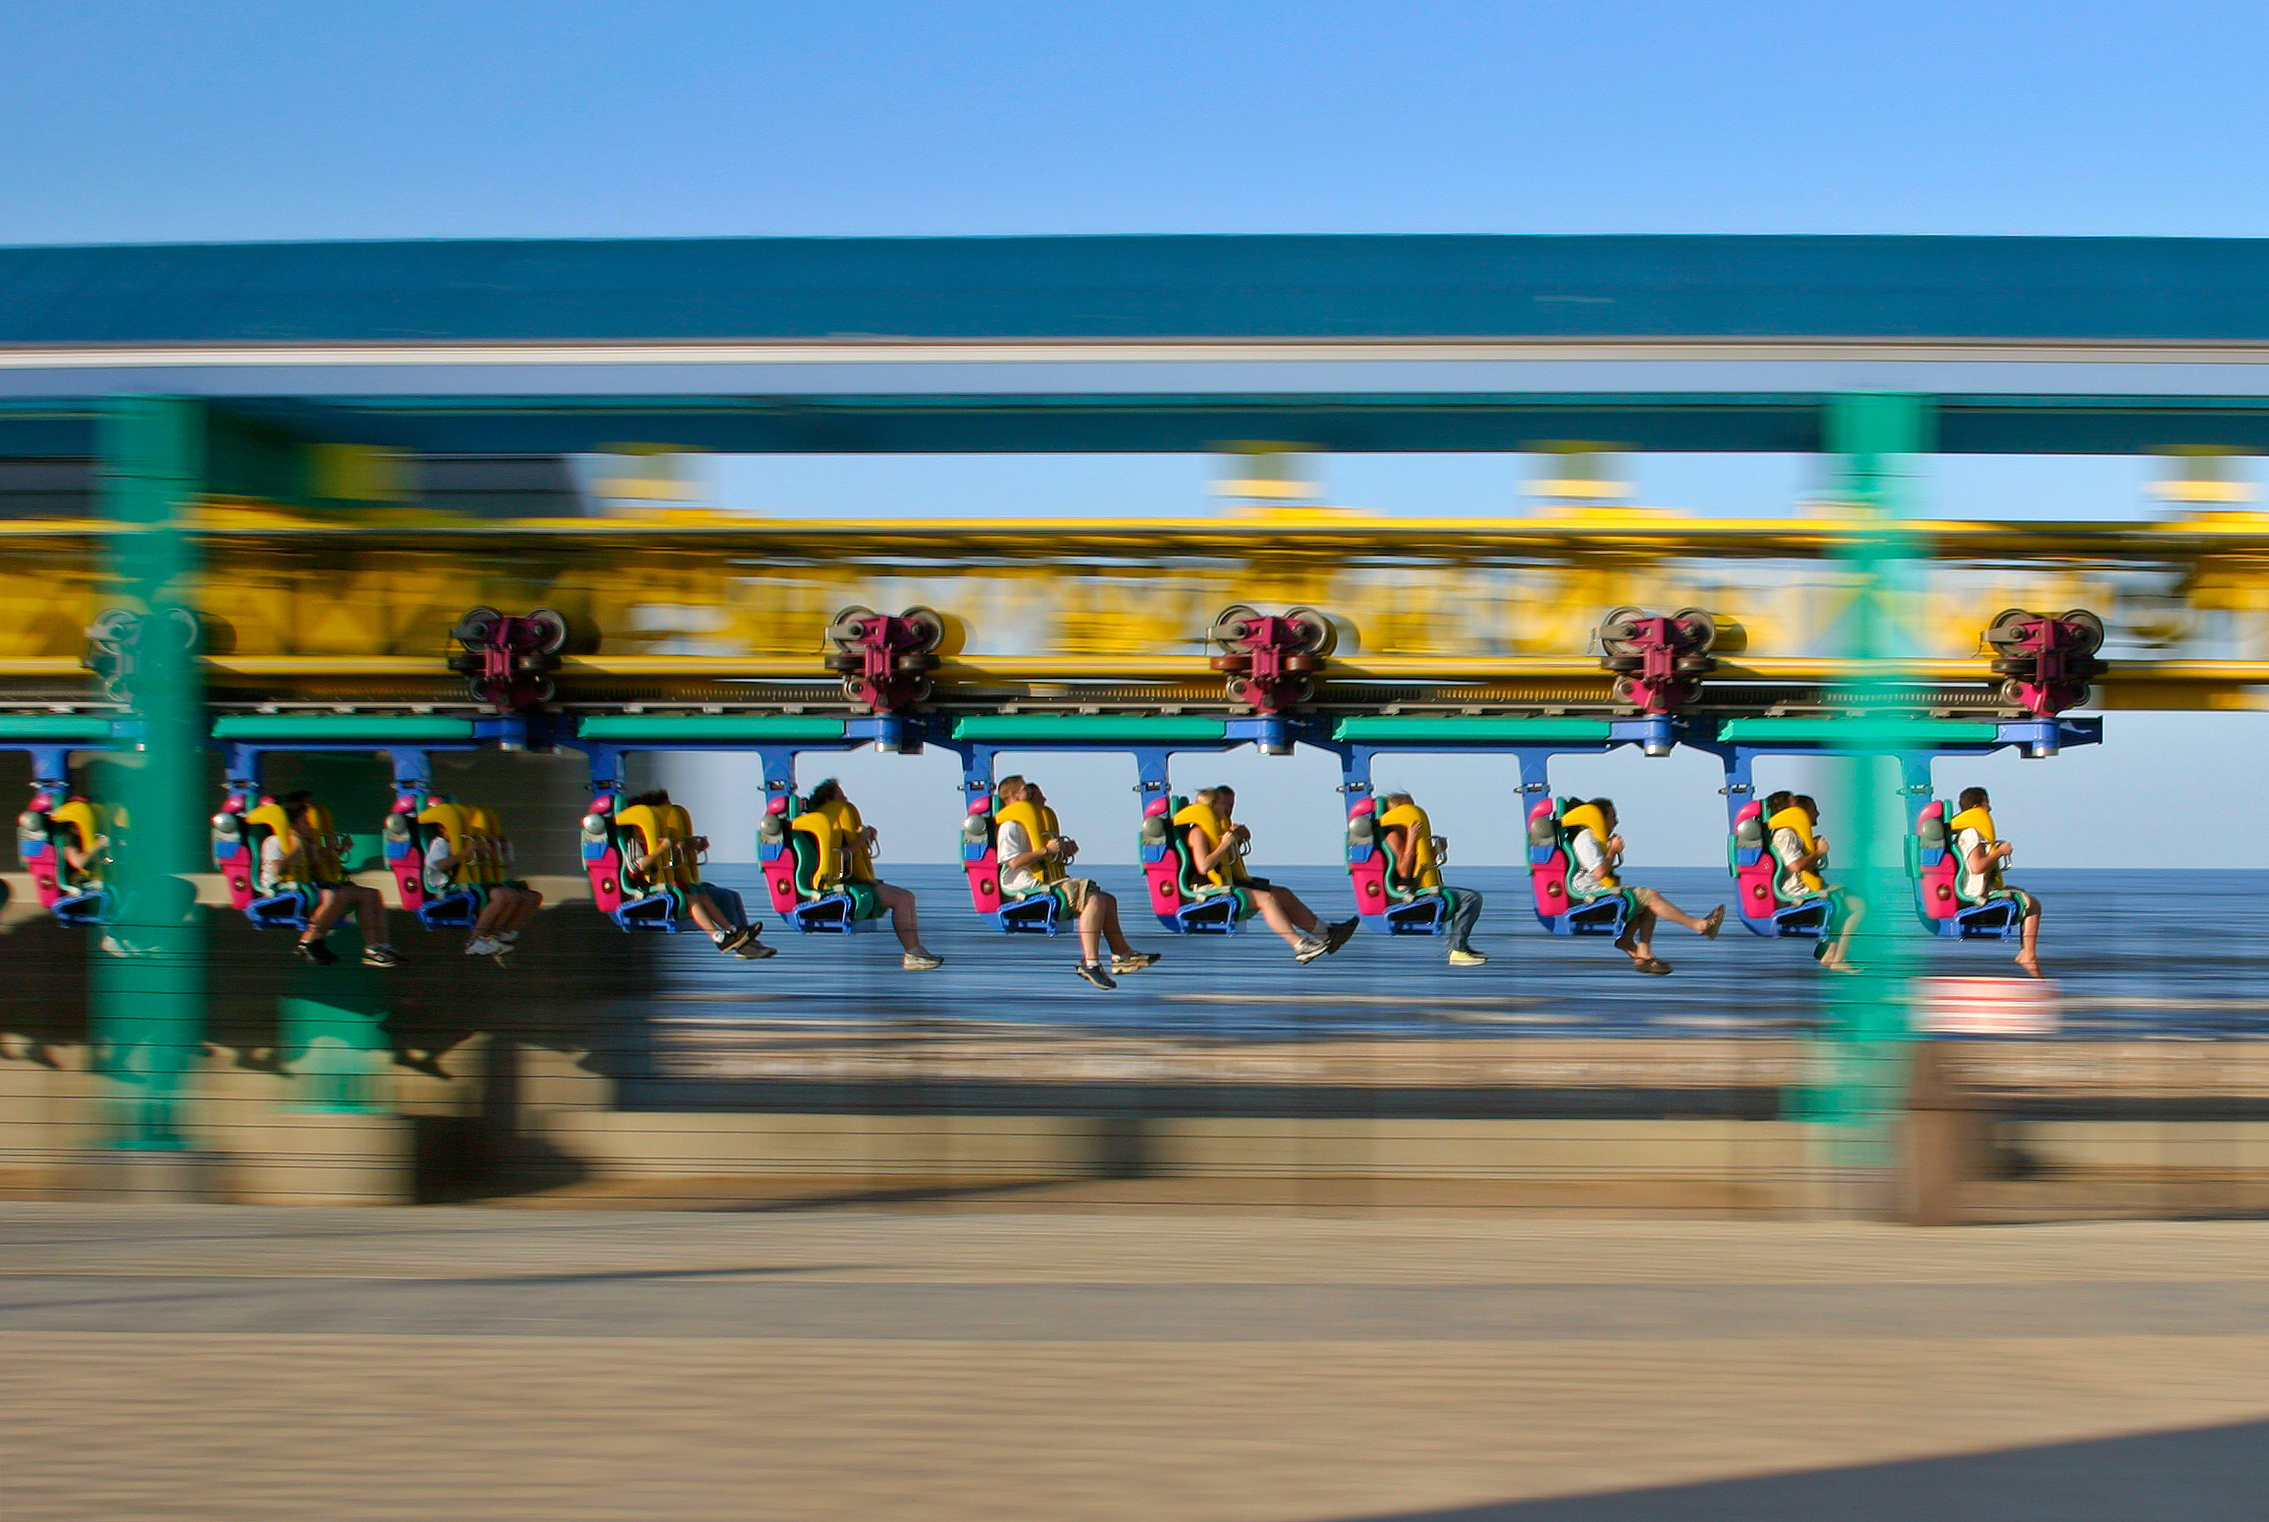 Fast roller coaster.